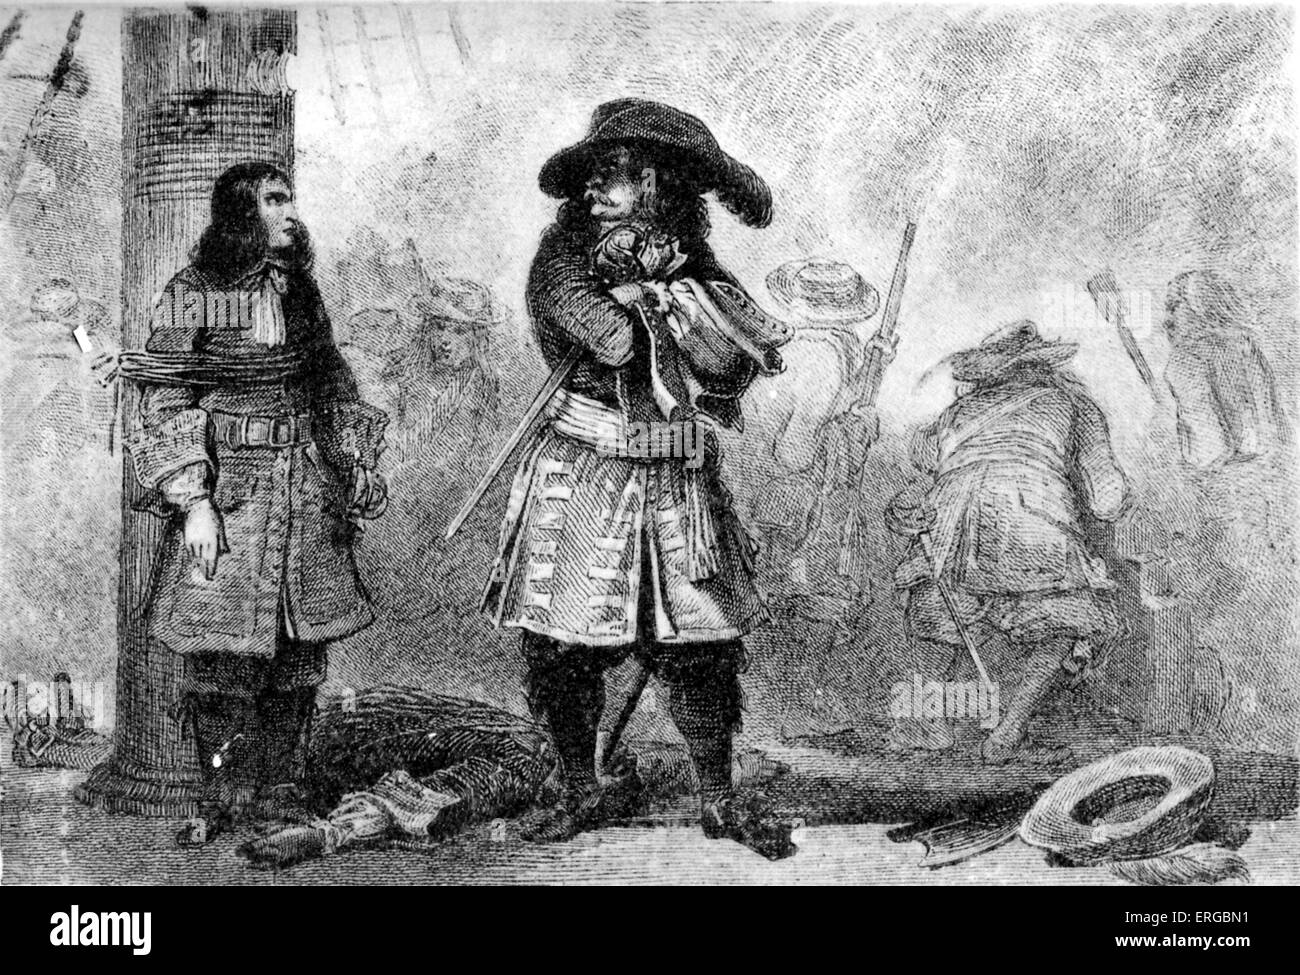 Jean Bart, marin flamand, a servi la couronne de France en tant que commandant de la marine et corsaire. JB : 21 octobre 1651 - 27 avril 1702. Après Banque D'Images